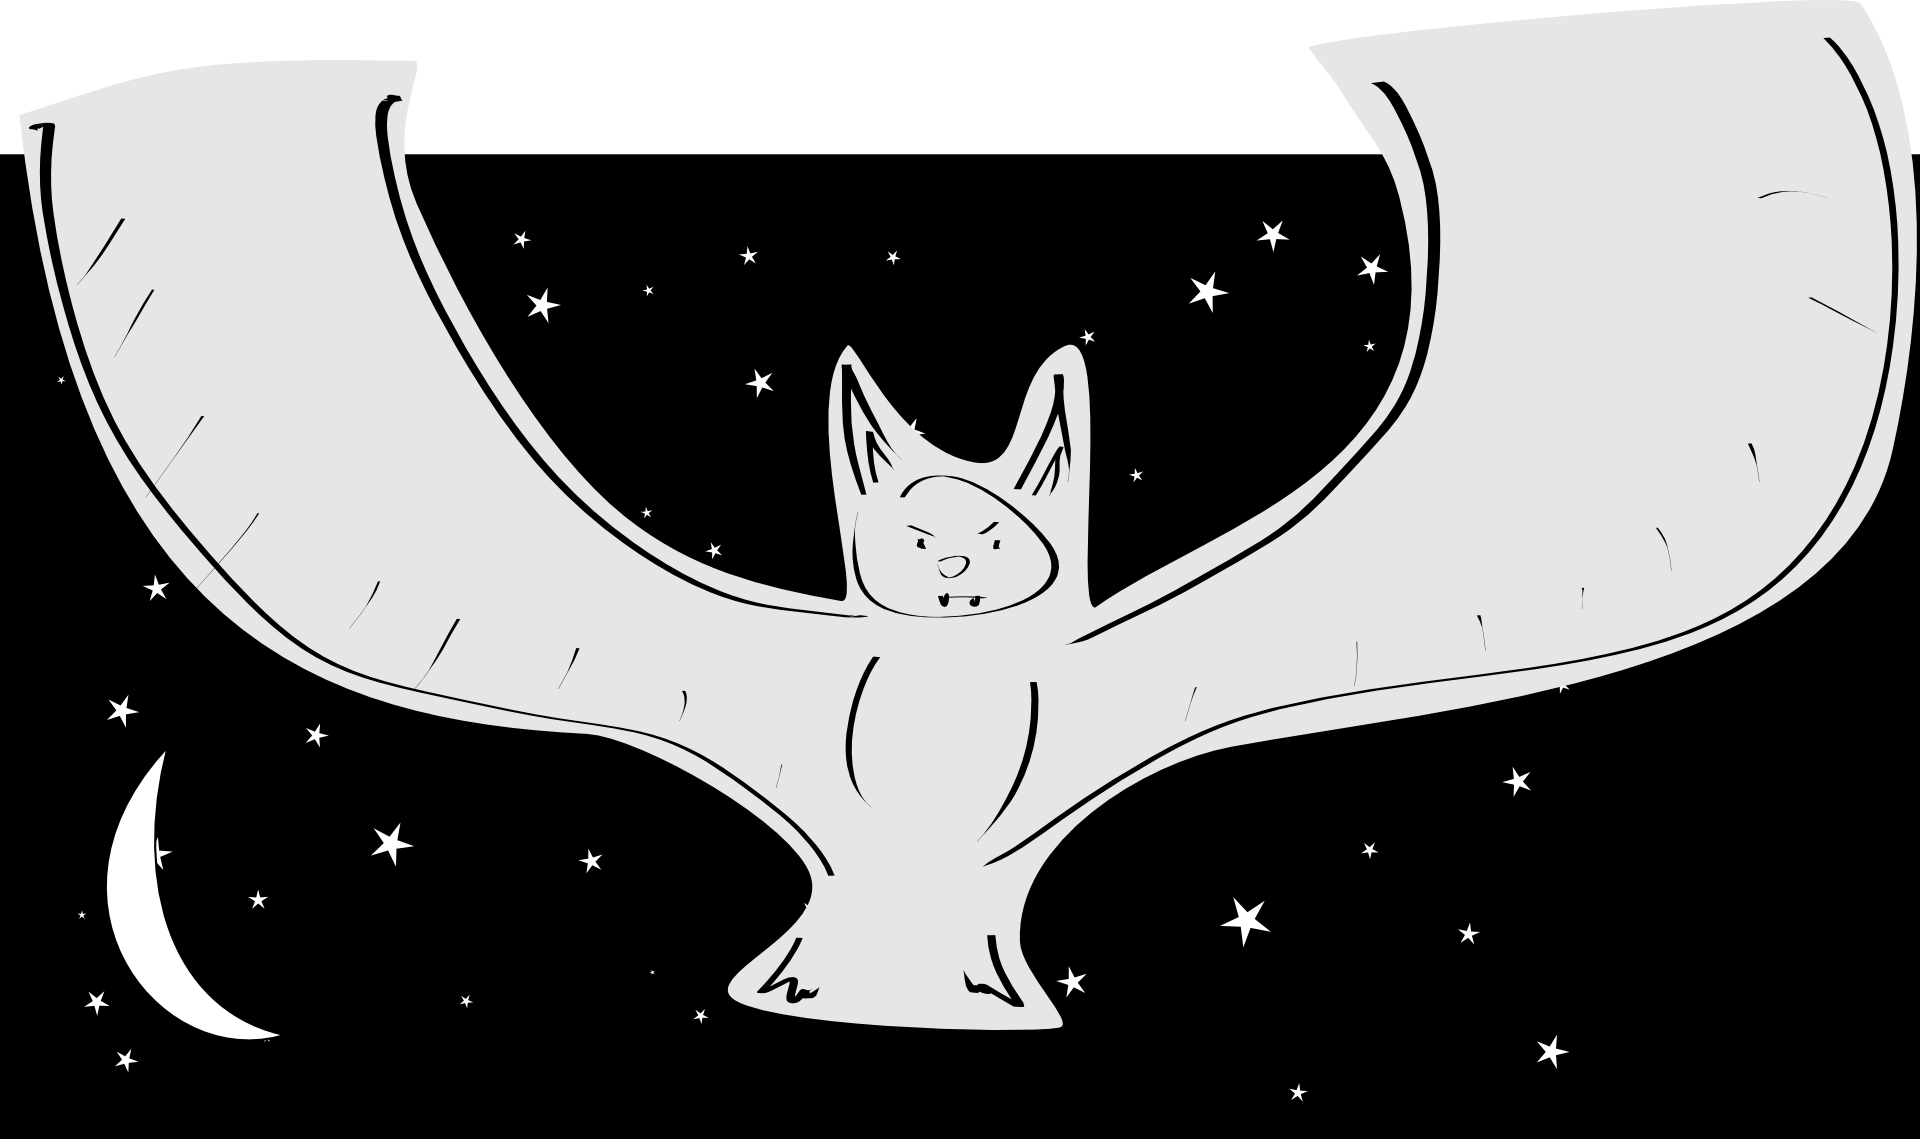 Bat against a night sky